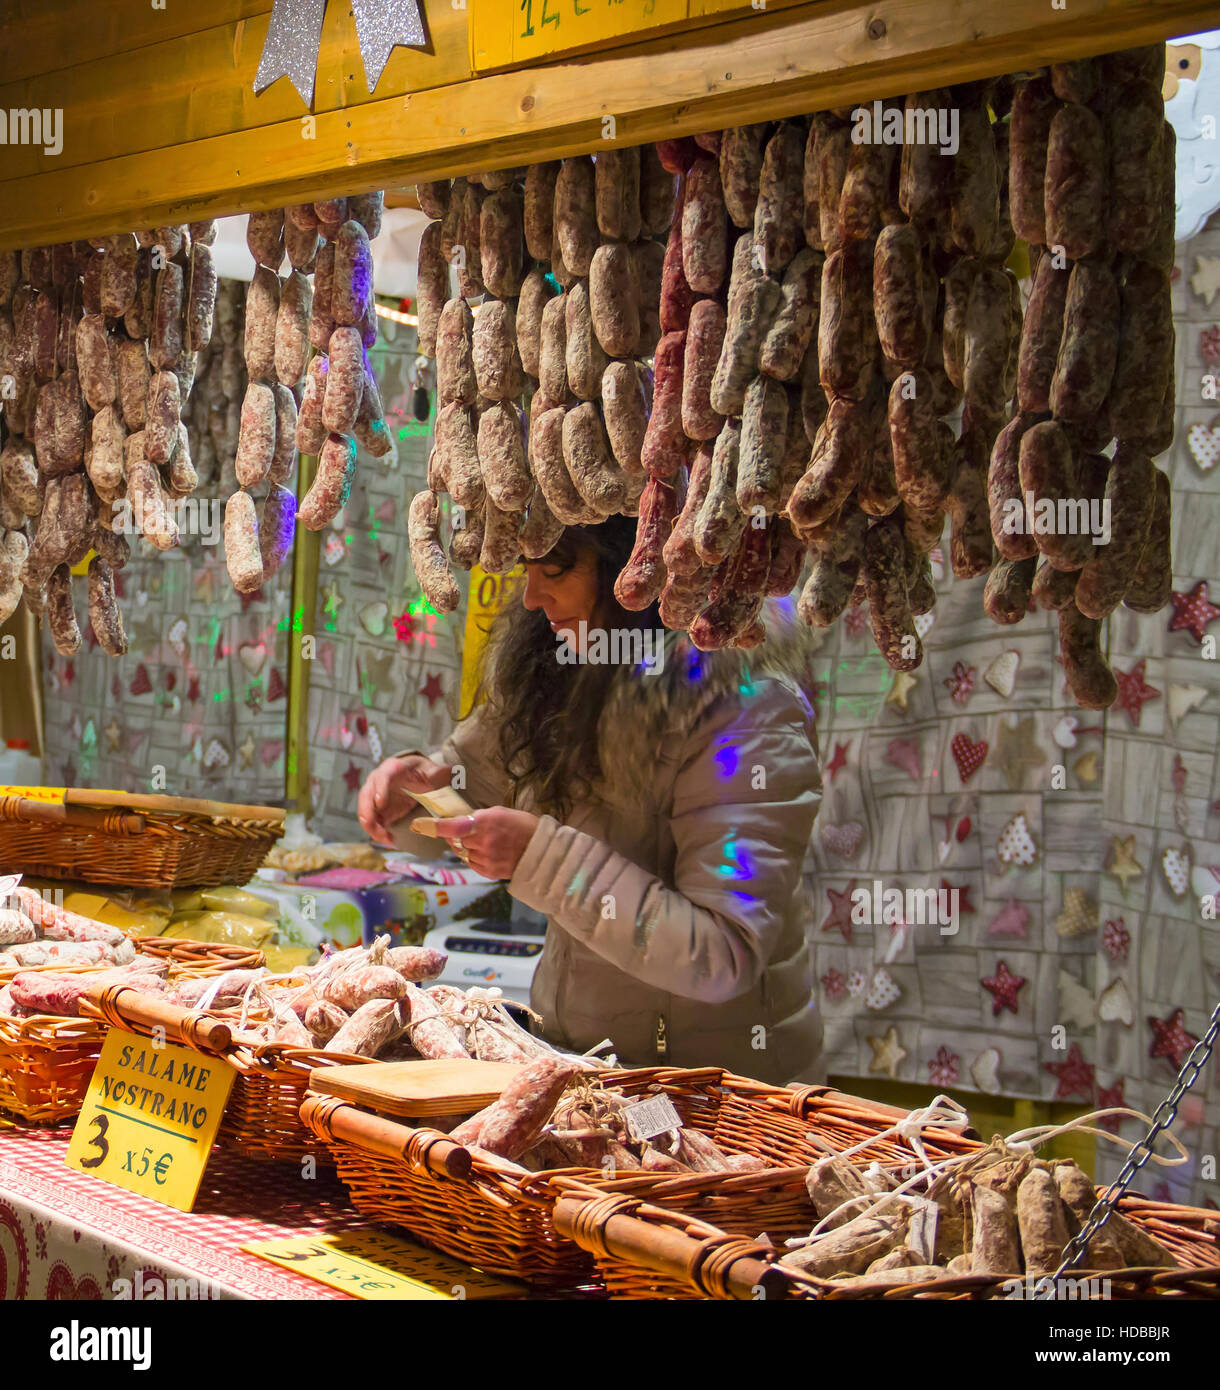 COMO, ITALY - DECEMBER 2, 2016: Woman sells salami sausages at winter Christmas market Stock Photo